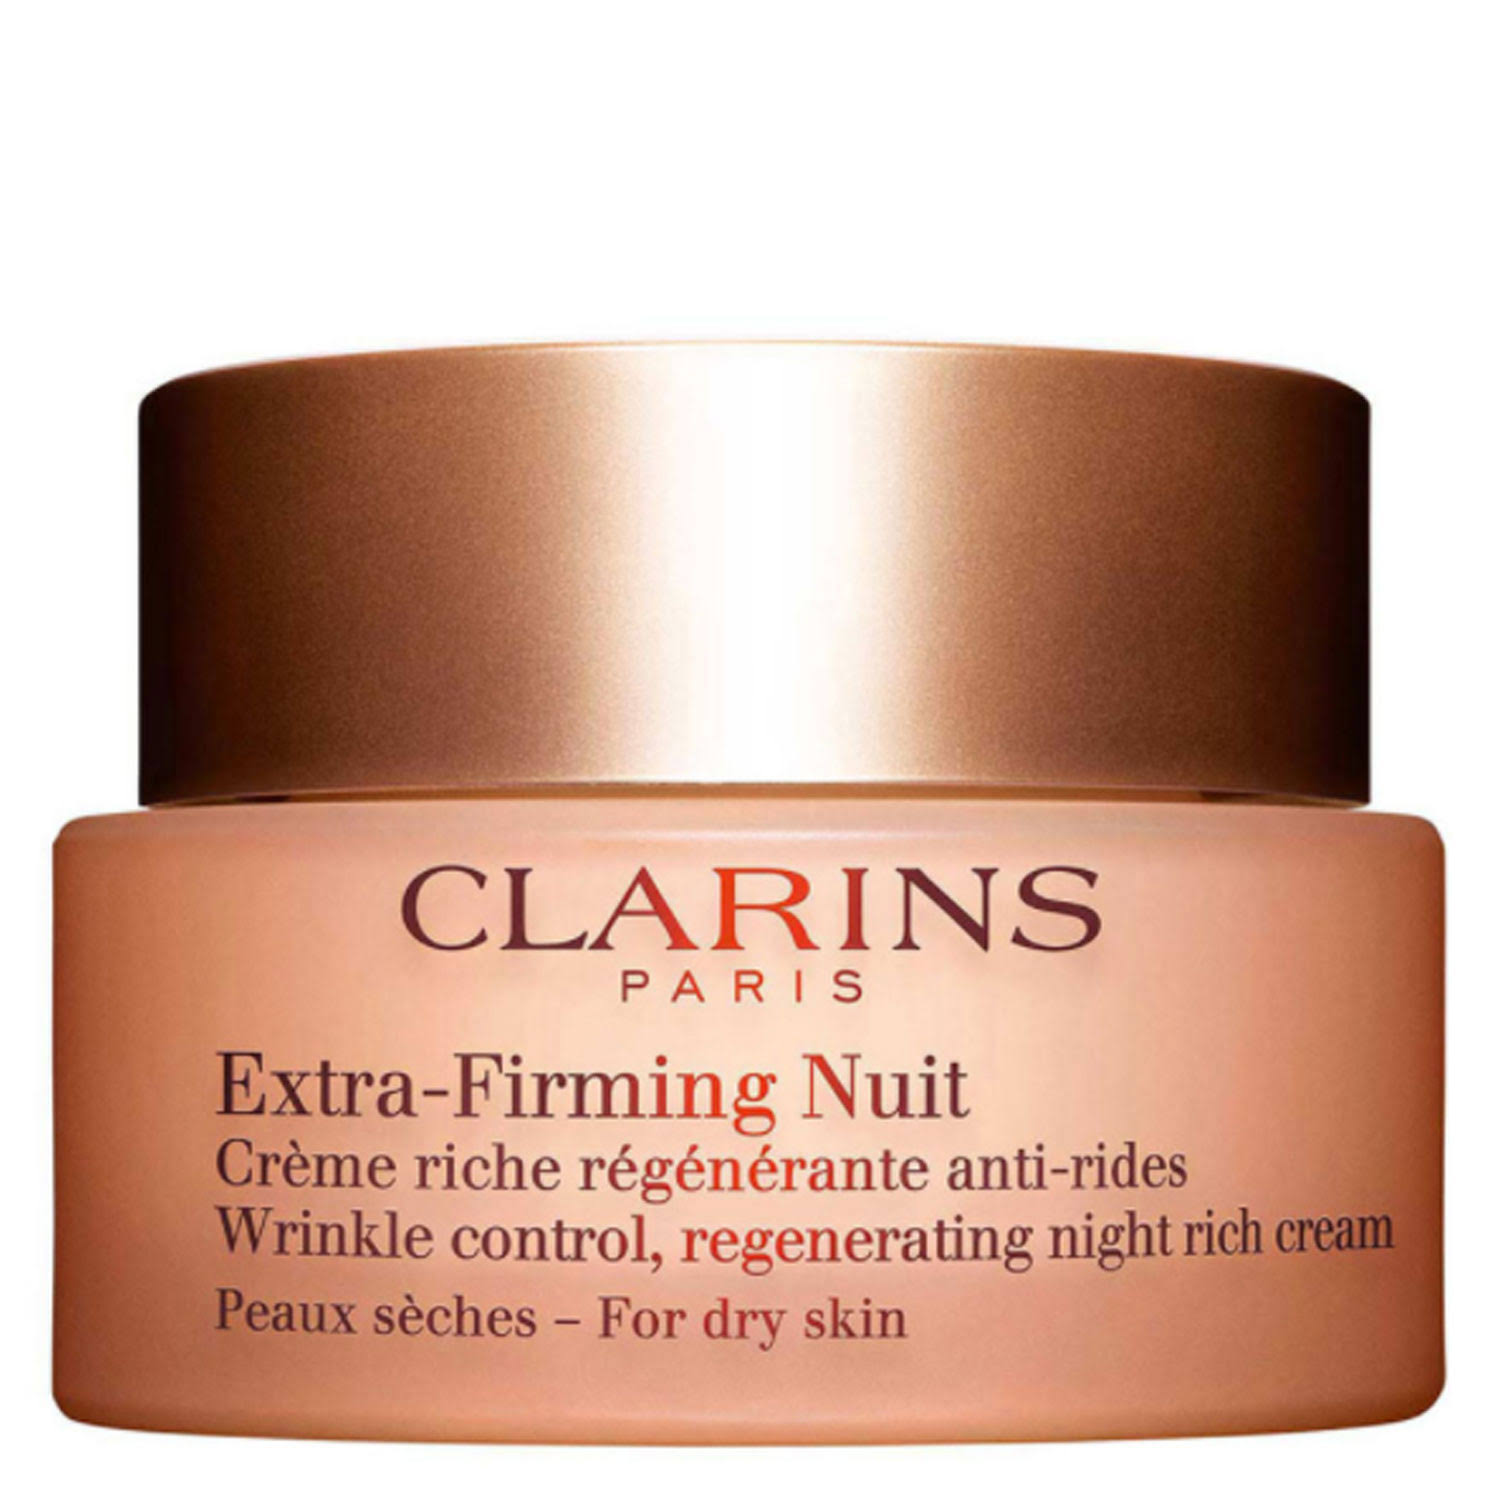 Clarins Extra-firming Night – Dry Skin 50.0 mL